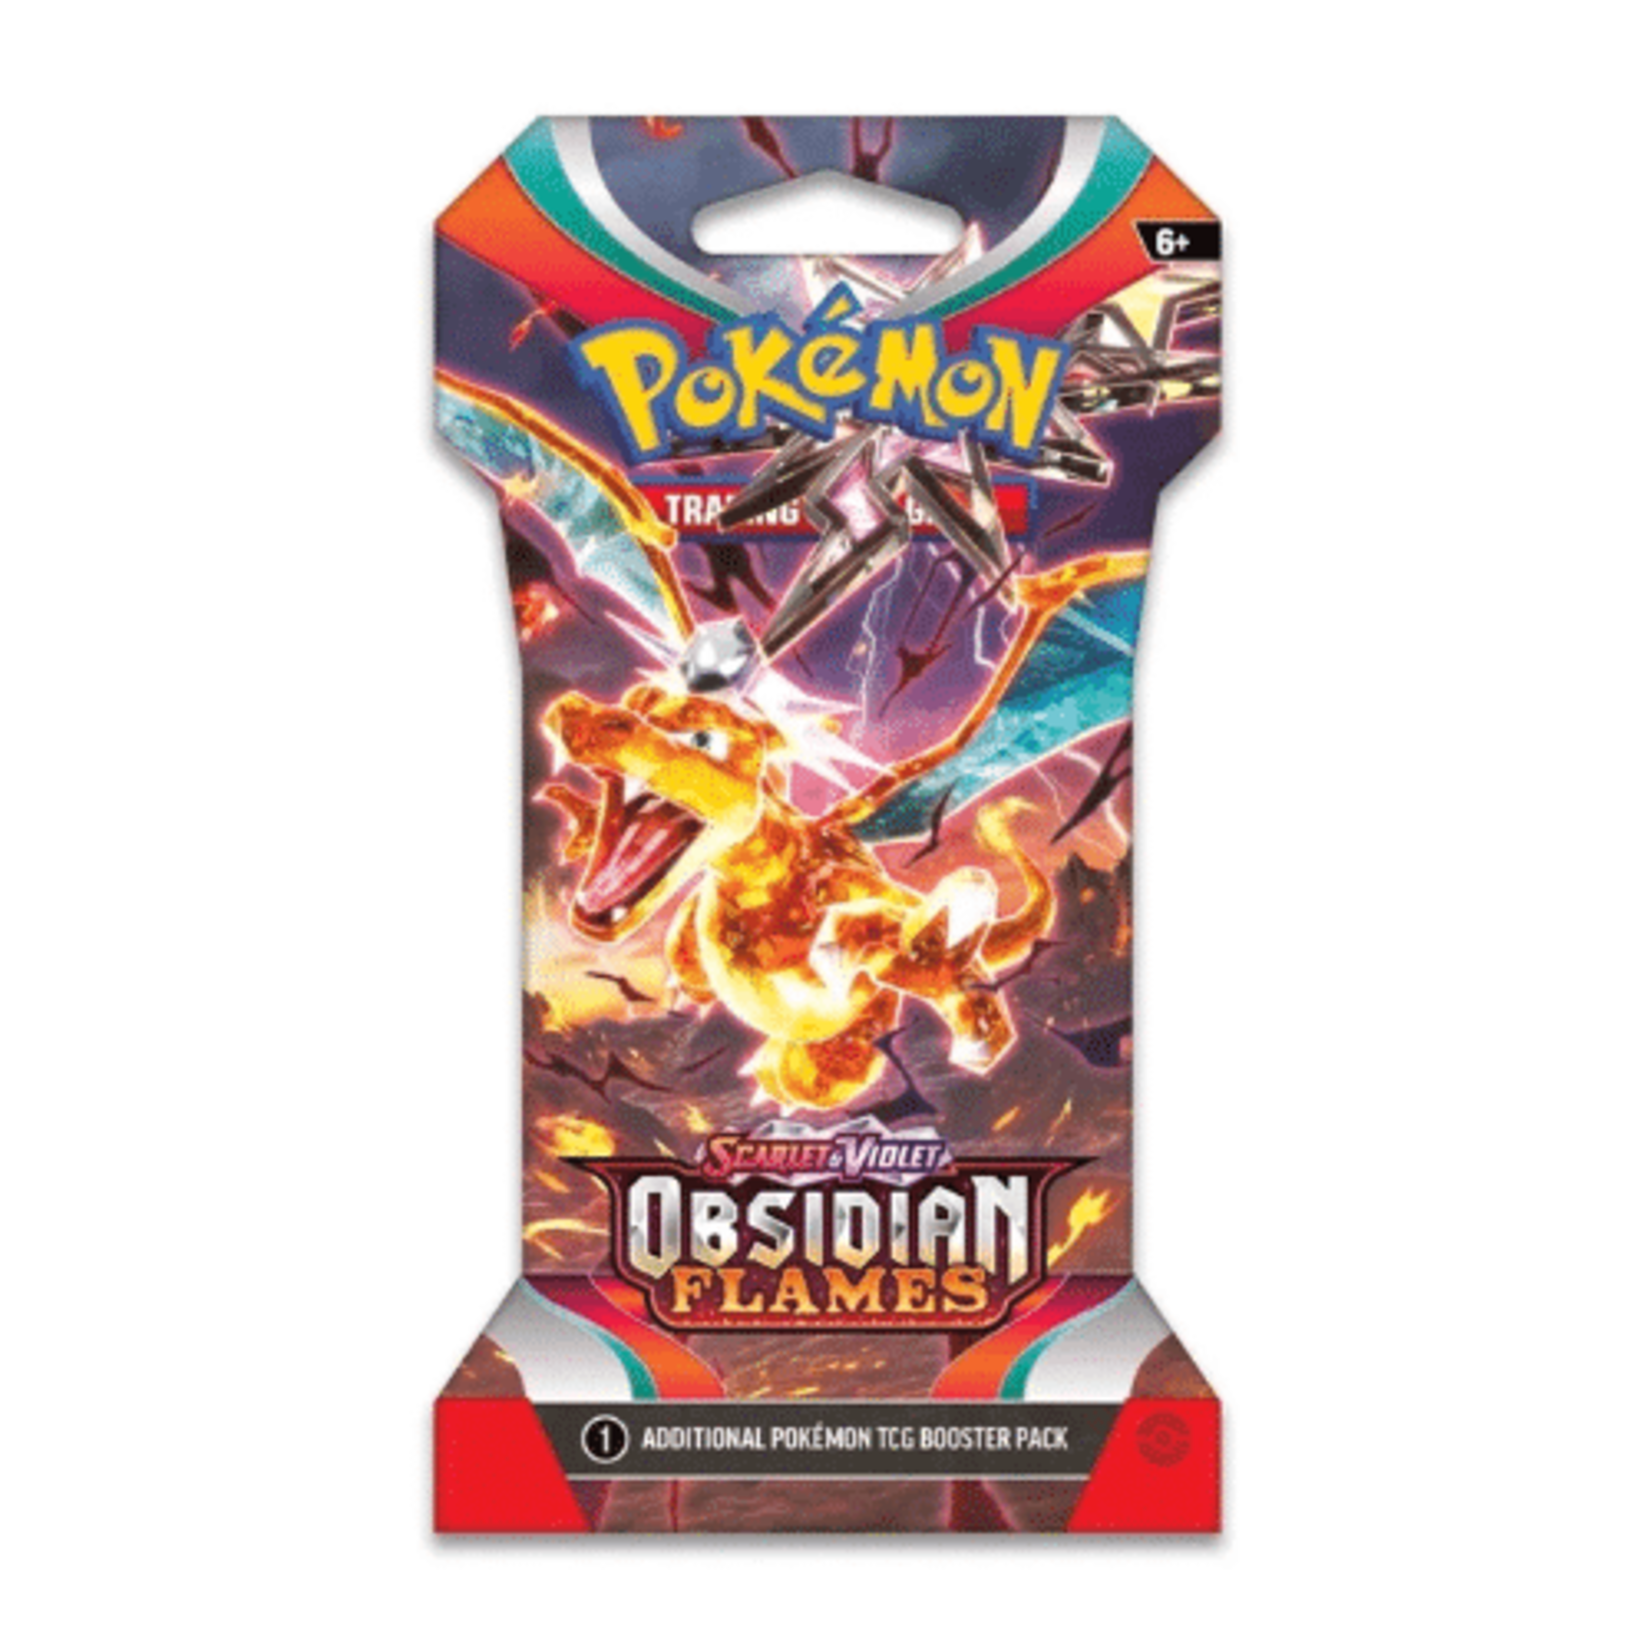 Pokémon Pokemon Obsidian Flames Sleeved Booster